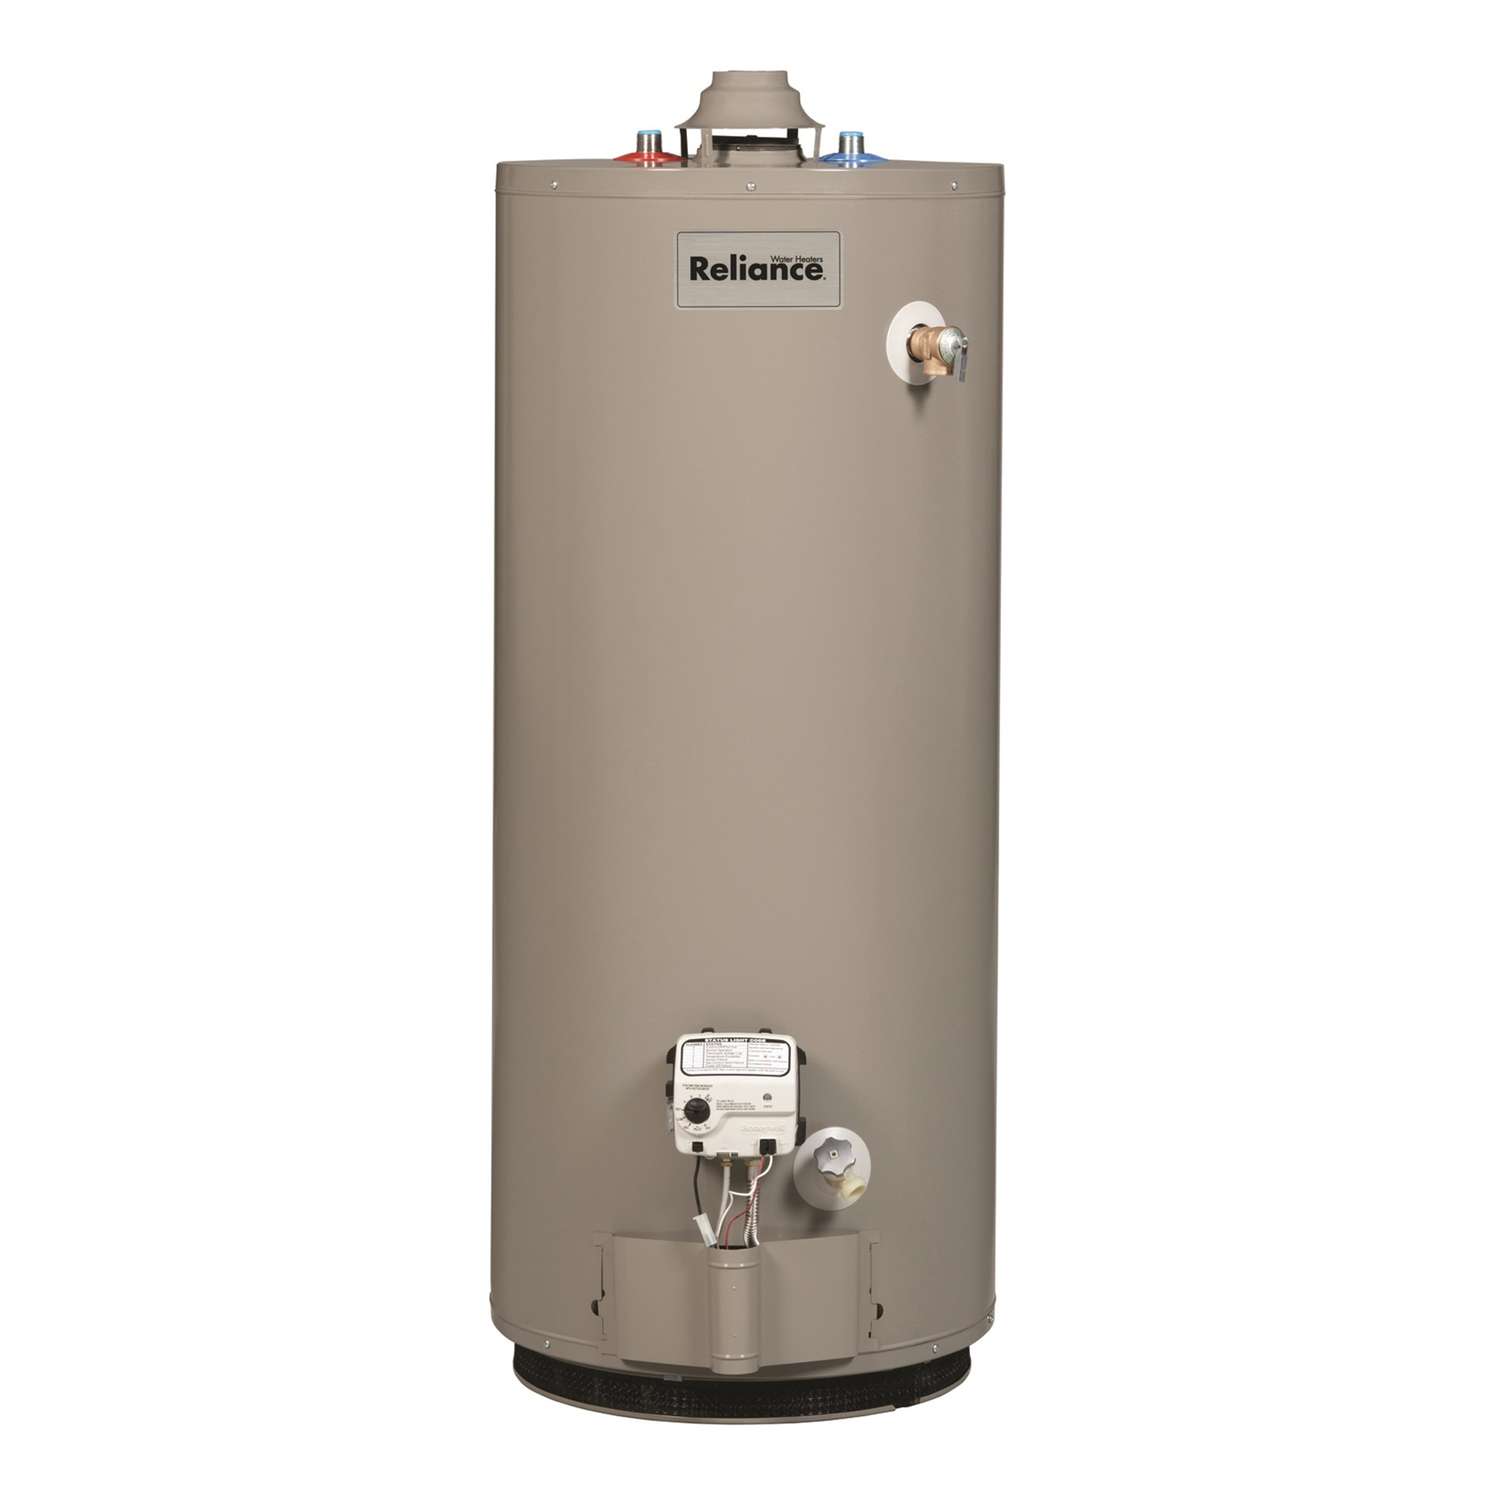 reliance-30-gal-35500-btu-natural-gas-water-heater-ace-hardware